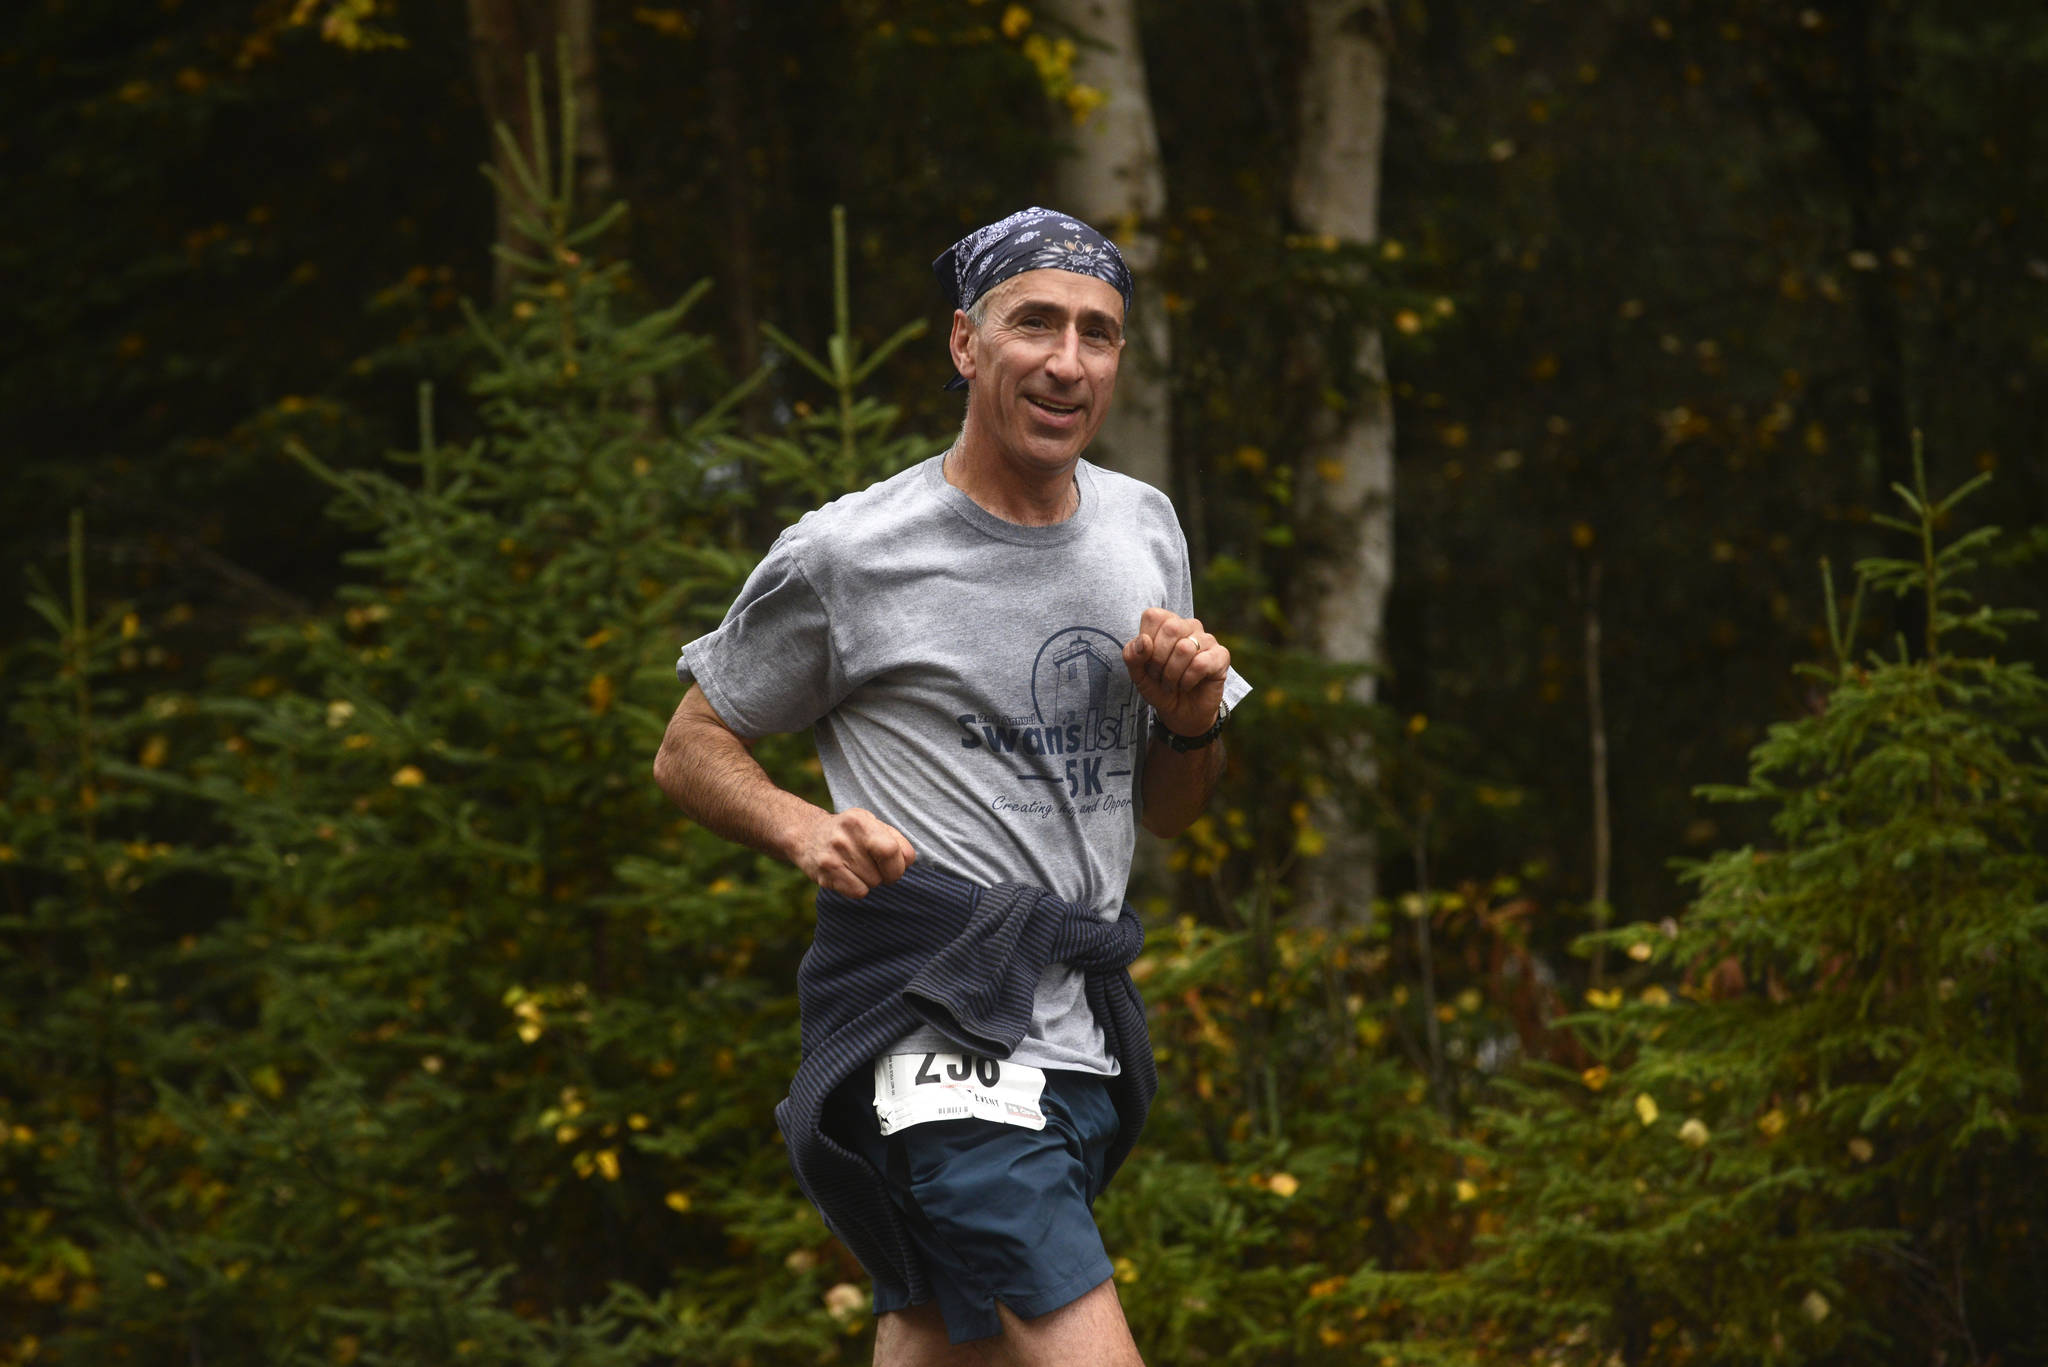 Victor Samoei runs in the Kenai River half-marathon on Sunday, Sept. 24, 2017 near Kenai, Alaska.